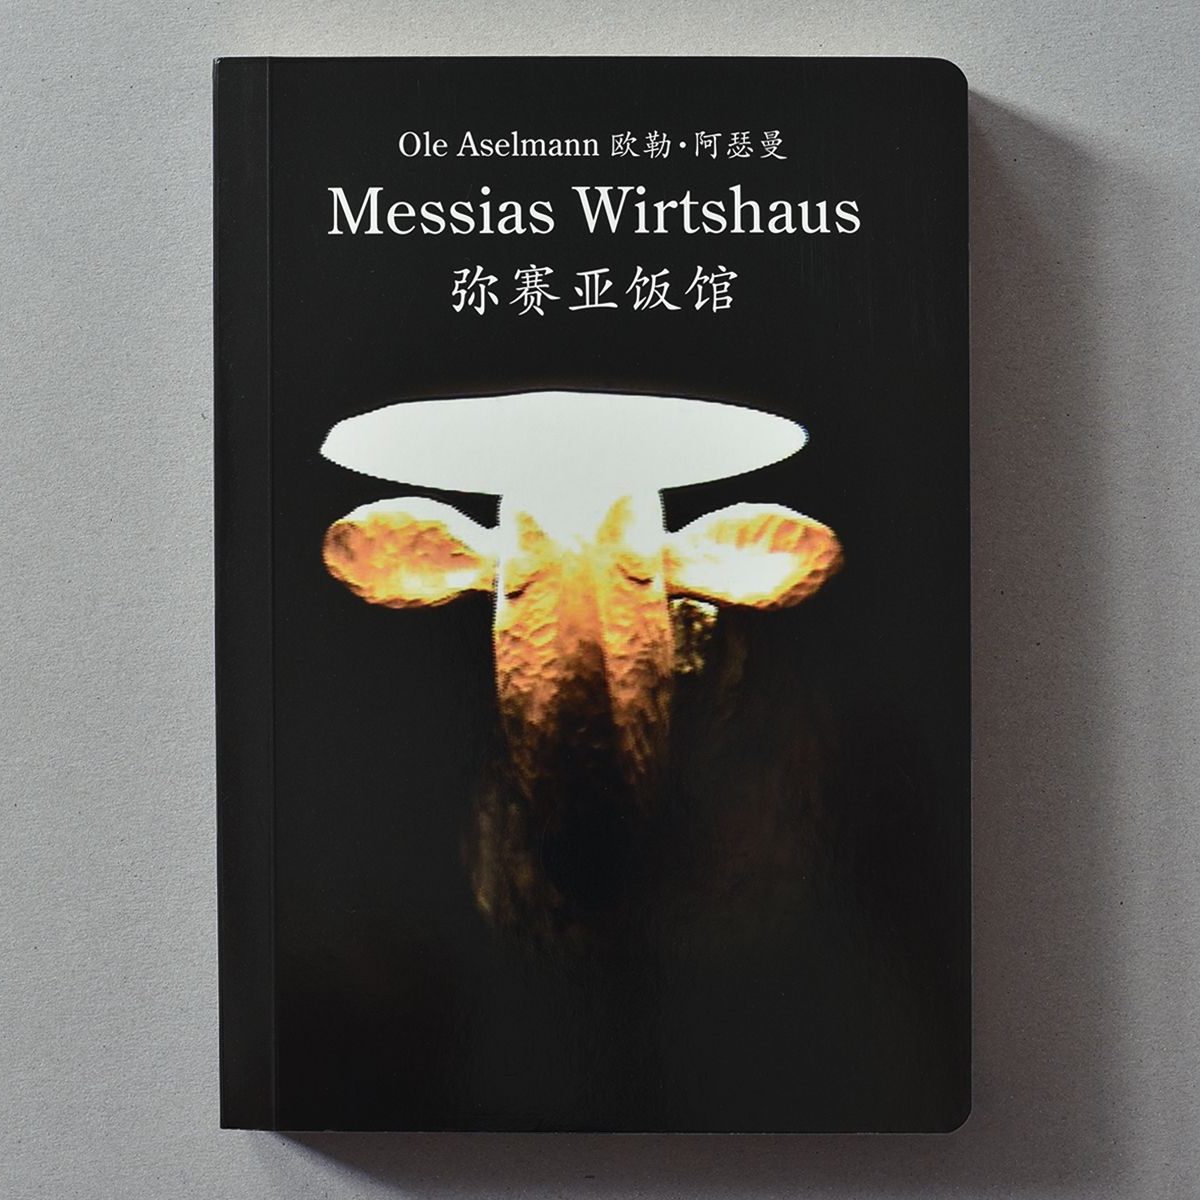 Katalog Ole Aselmann – Messias Wirtshaus